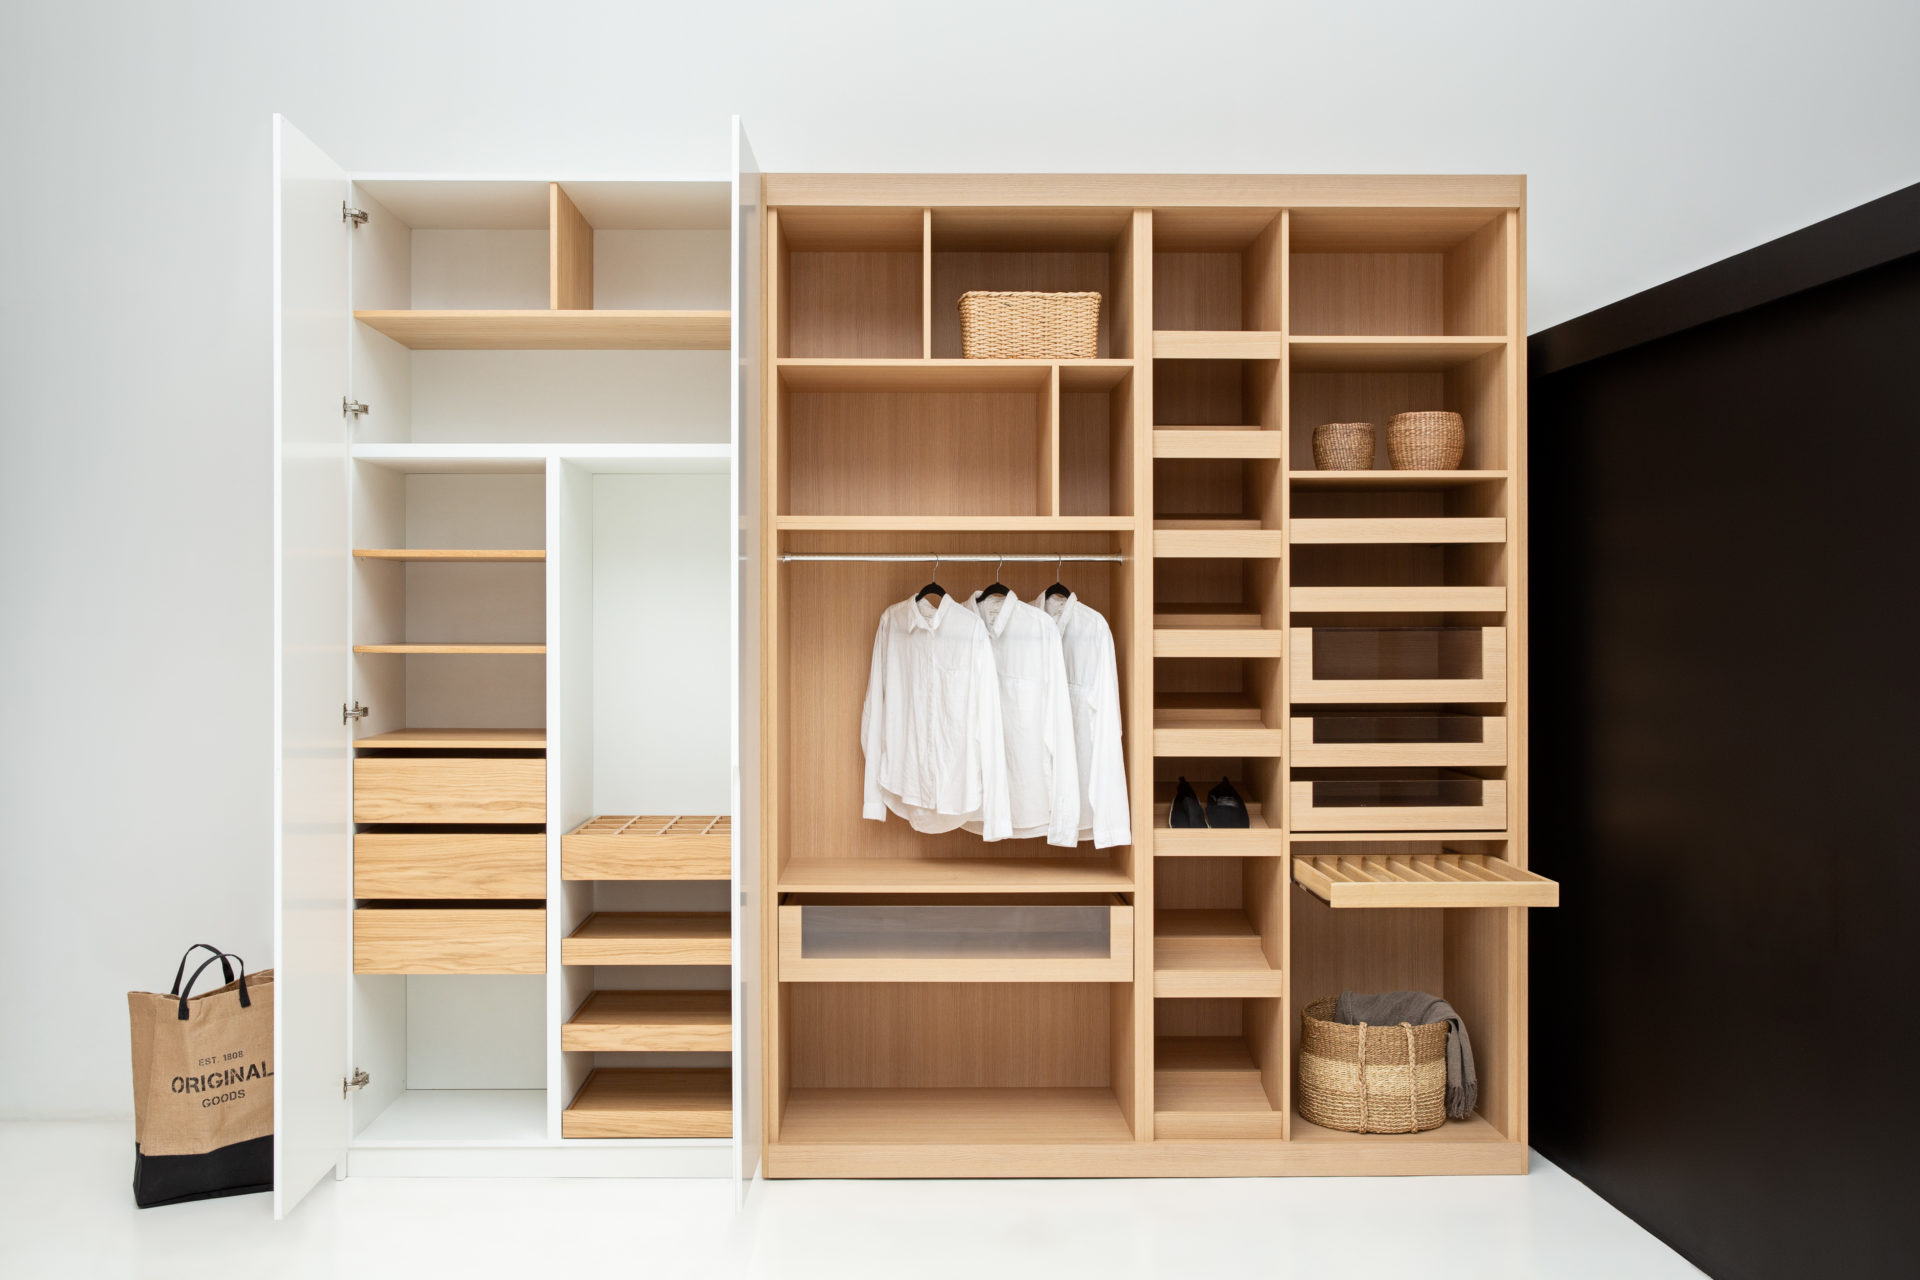 Closet Design - The lifestyle closet by KITMO